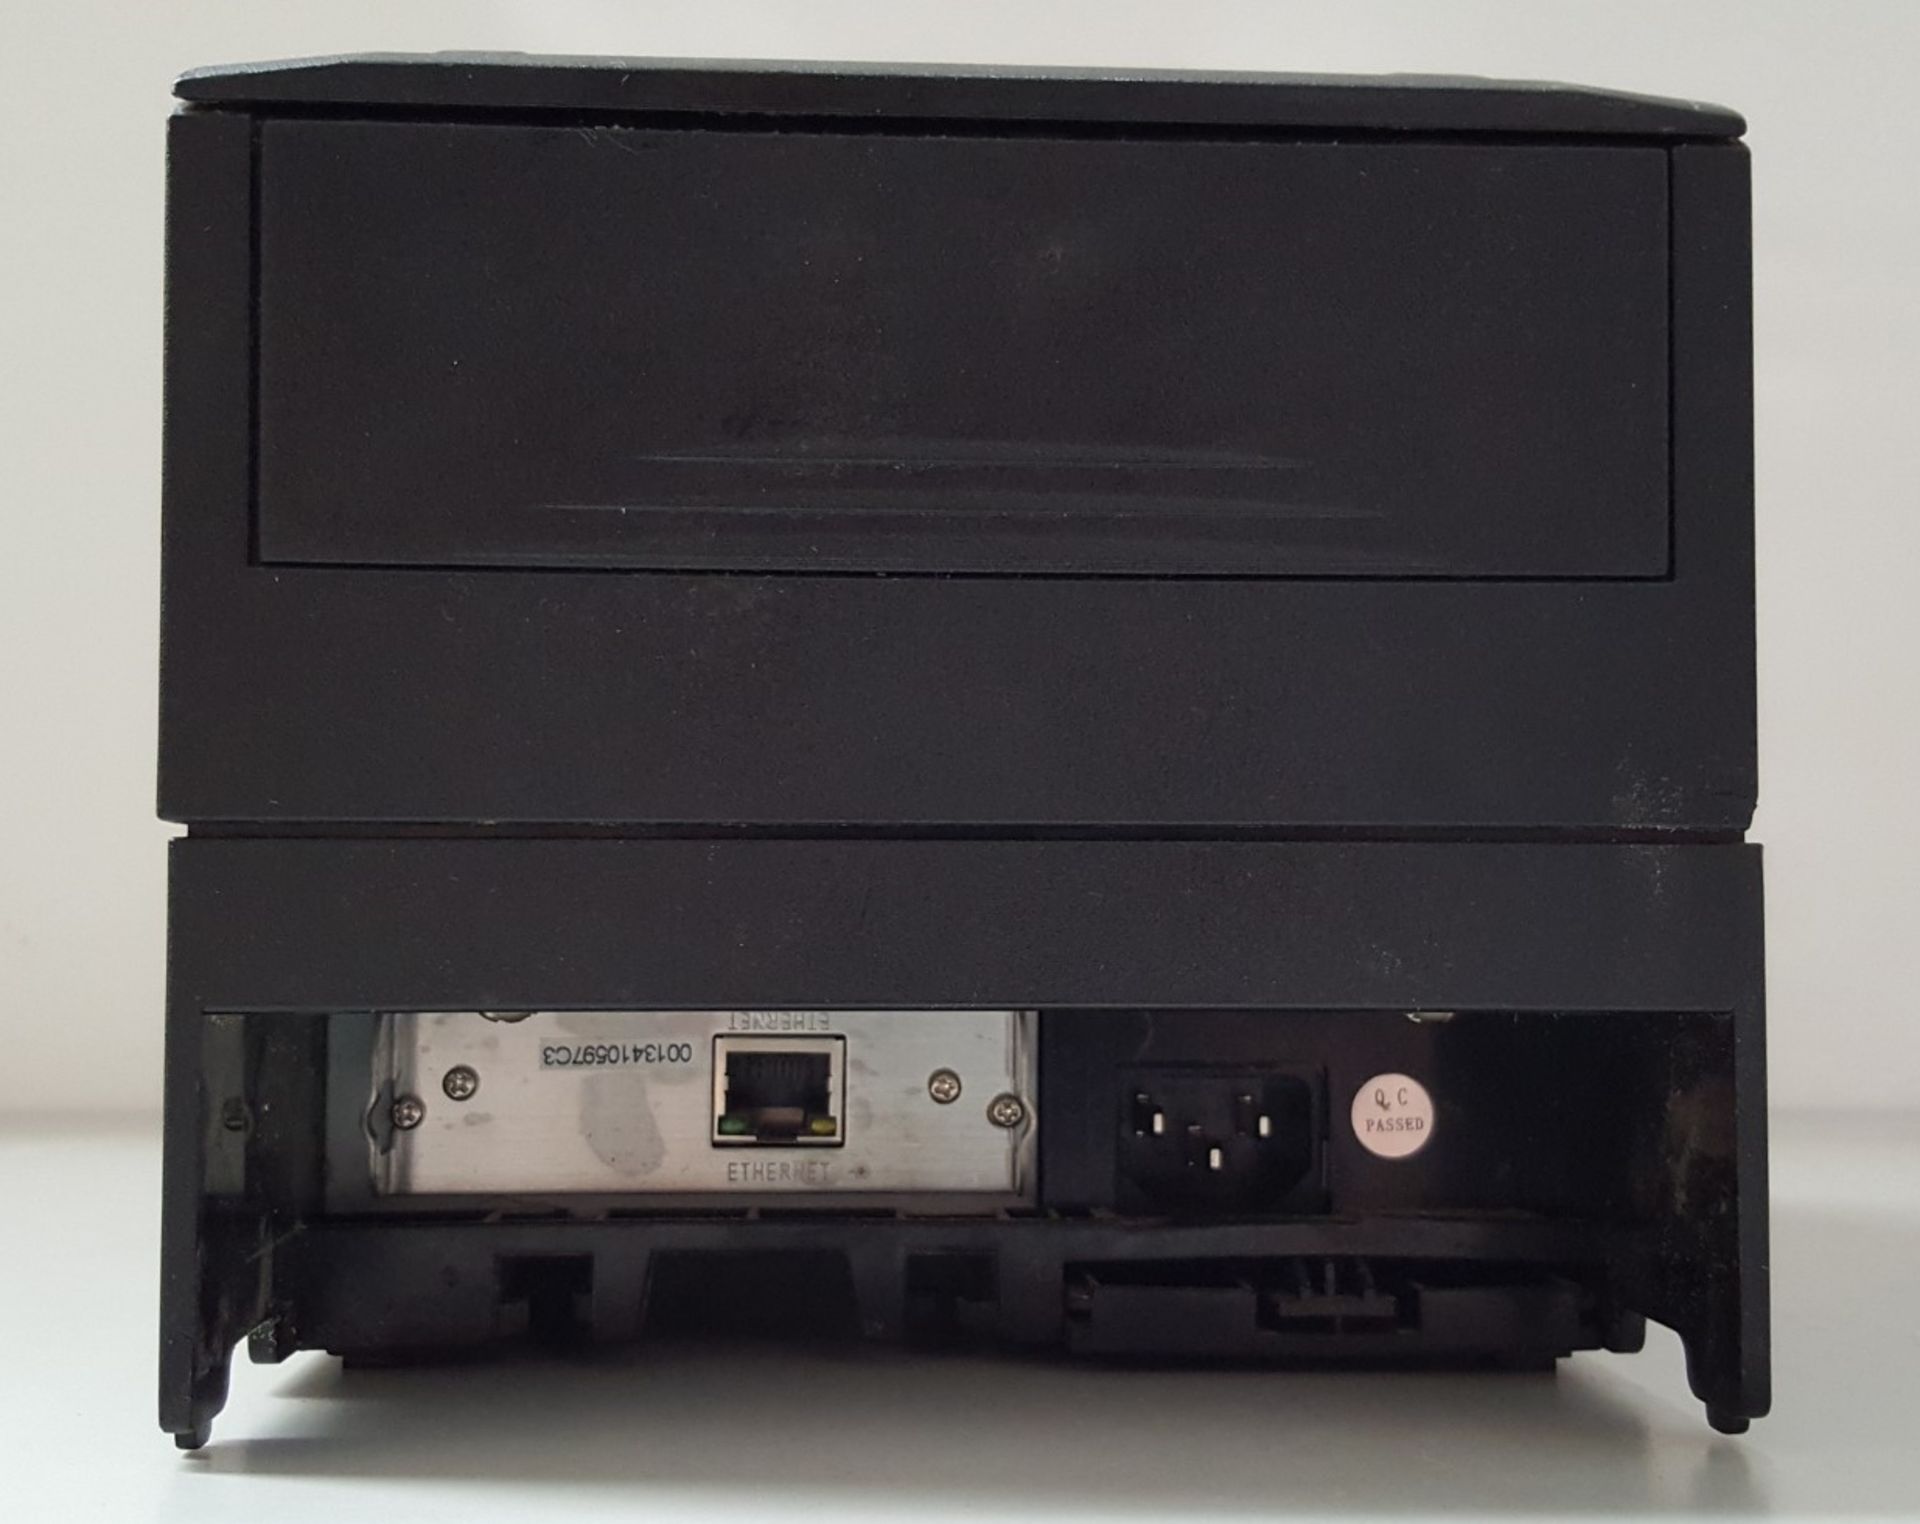 1 x SNBC Ethernet/USB Receipt Printer BTP-M300 Black - Ref BY114 AC3 - Image 2 of 5